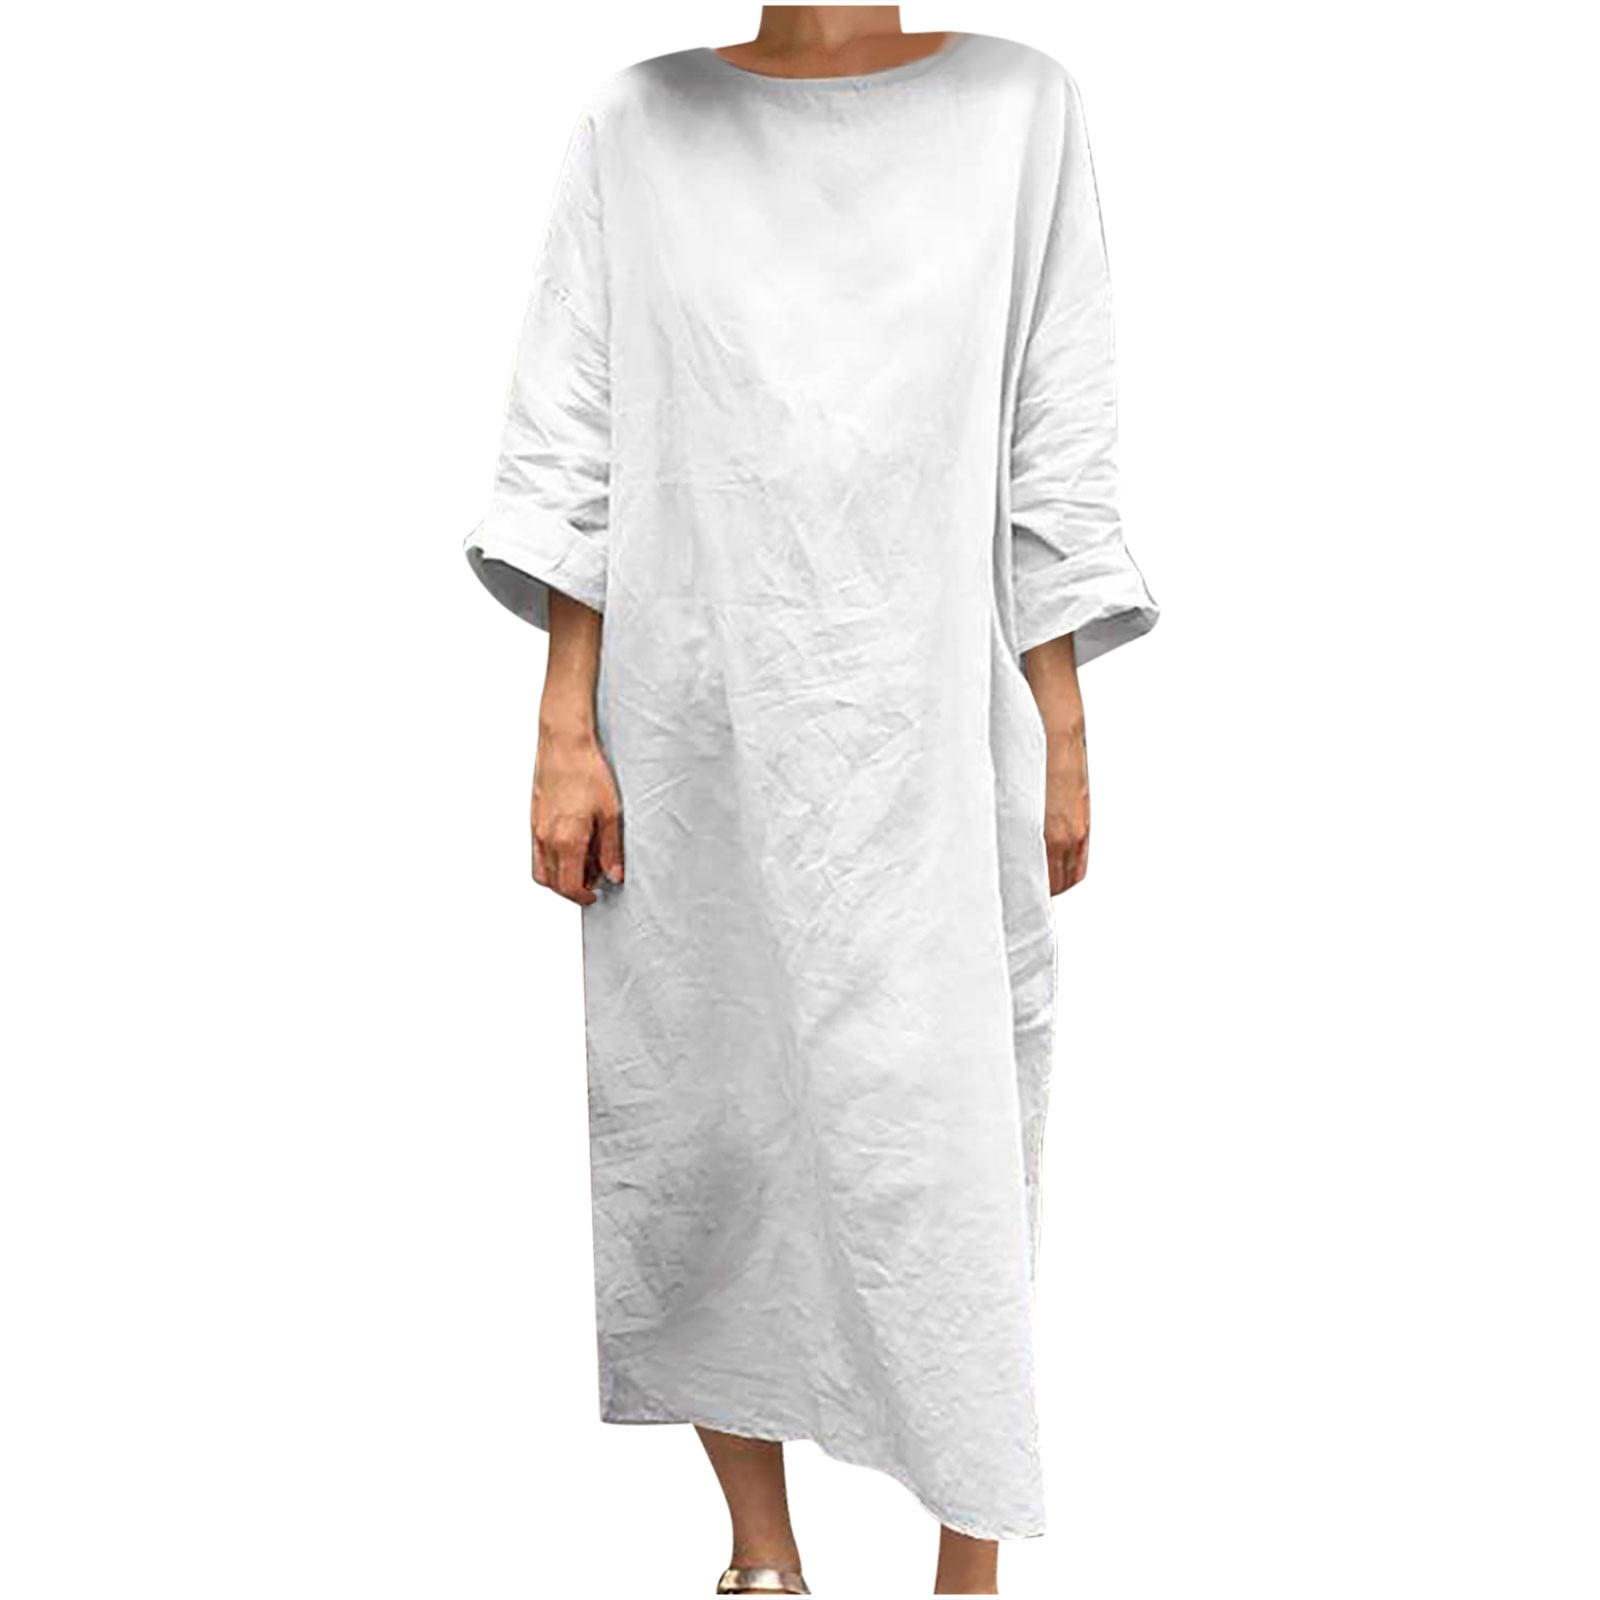 Linen Shift Dress for Women Summer Short Sleeve Loose Fit Comfy Baggy Crewneck Midi Dress Pockets Daily Chic Dresses 